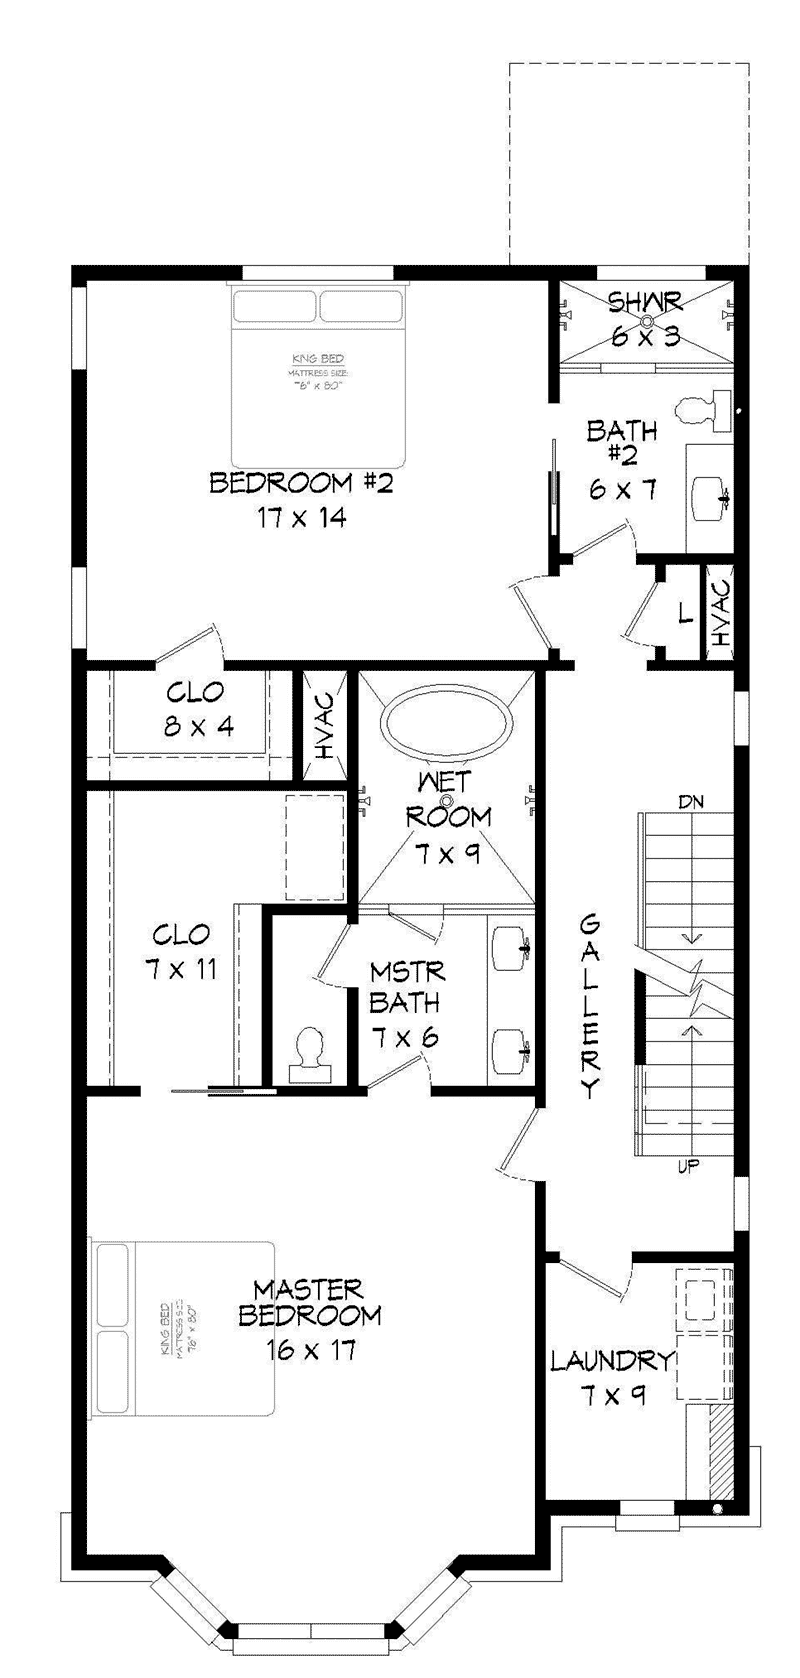 Greek Revival House Plan Second Floor - 141D-0269 - Shop House Plans and More